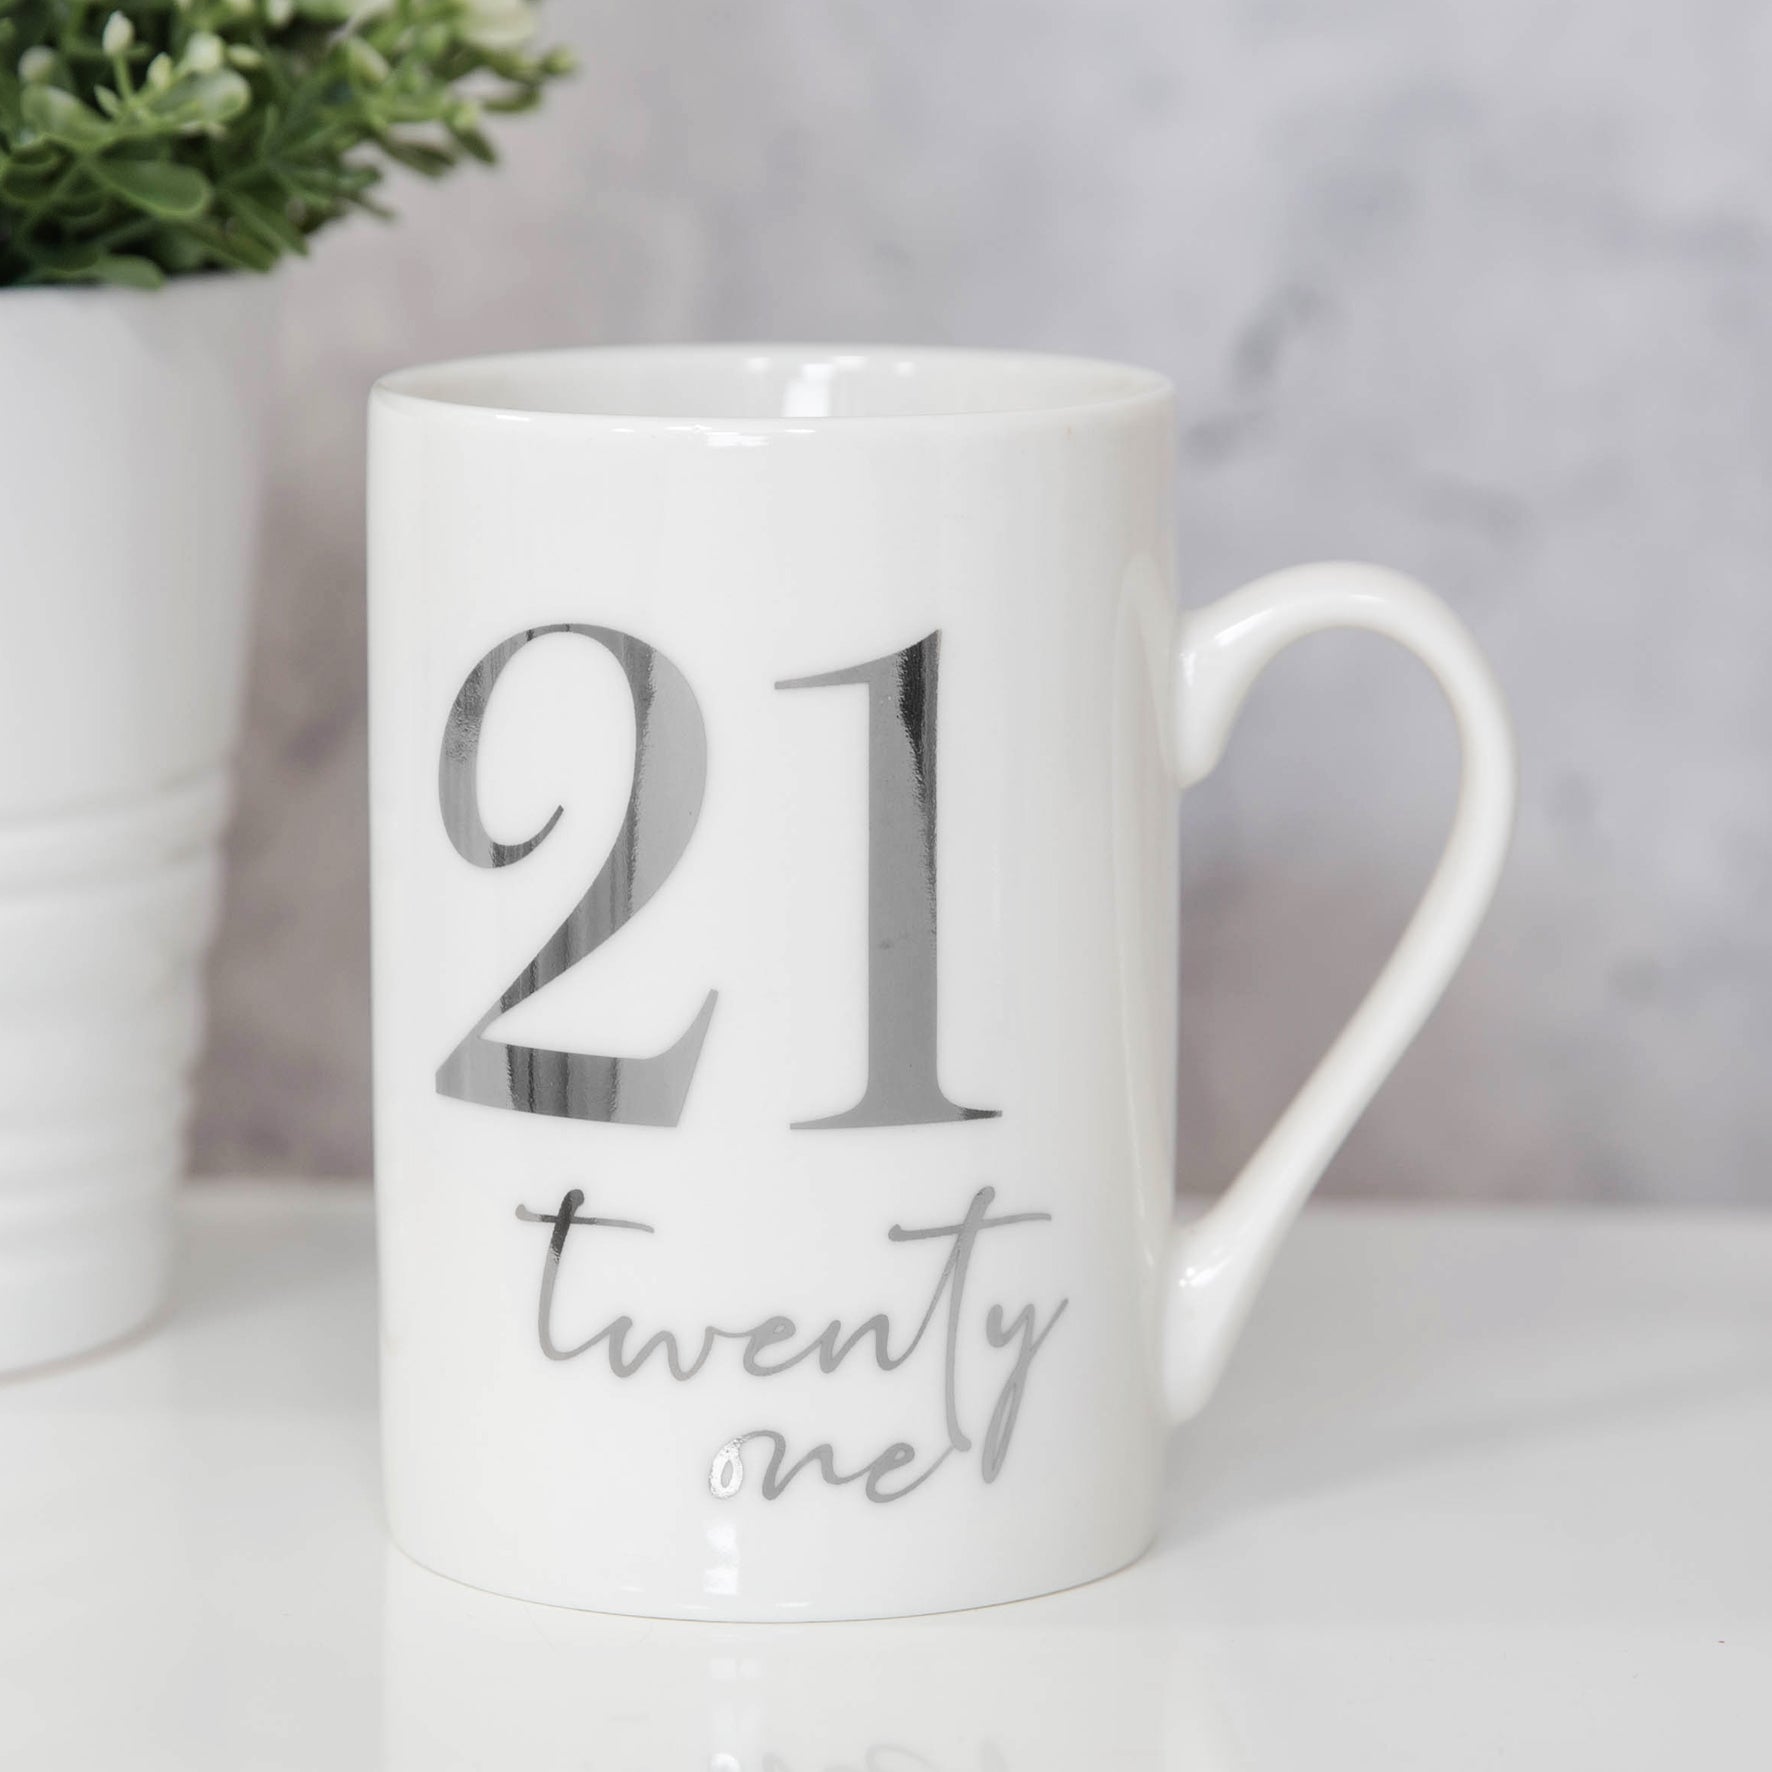 21st Birthday Mug - Silver Decals